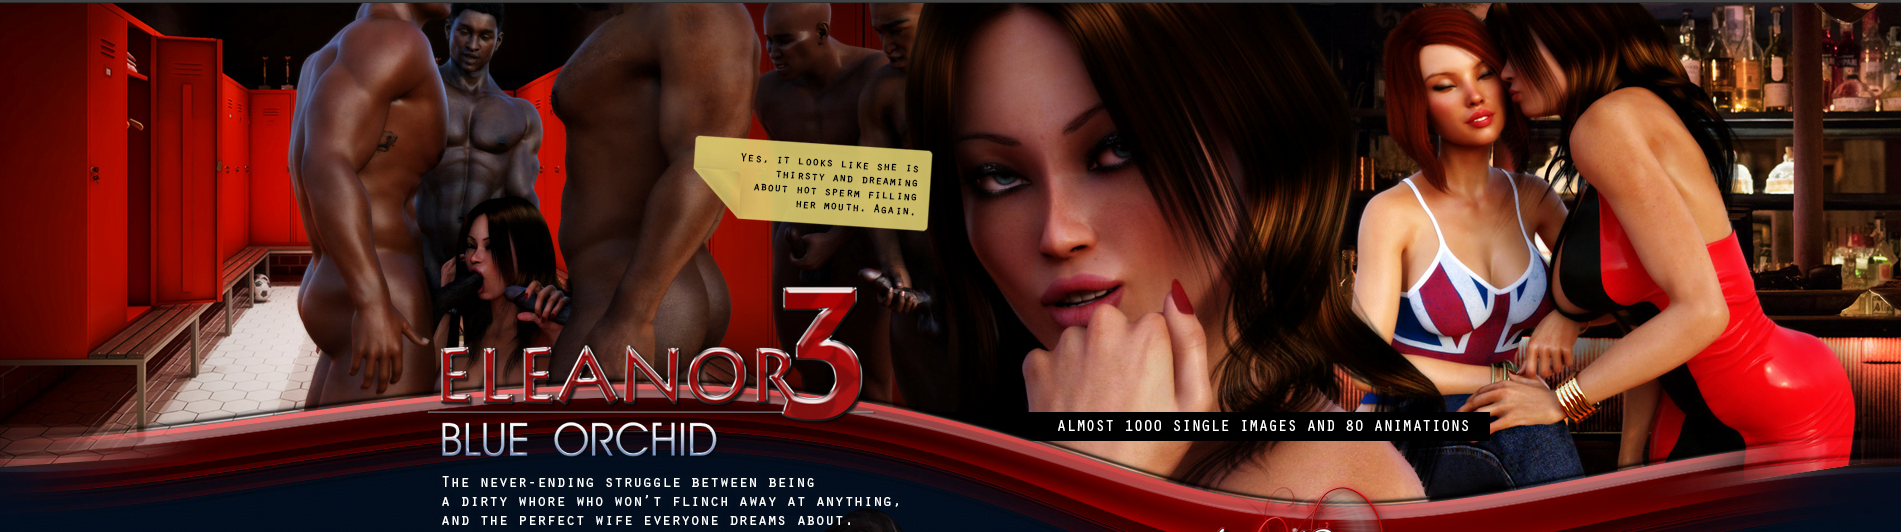 Eleanor 3: Blue Orchid – Version 1.0.2 - incest erotic game 1